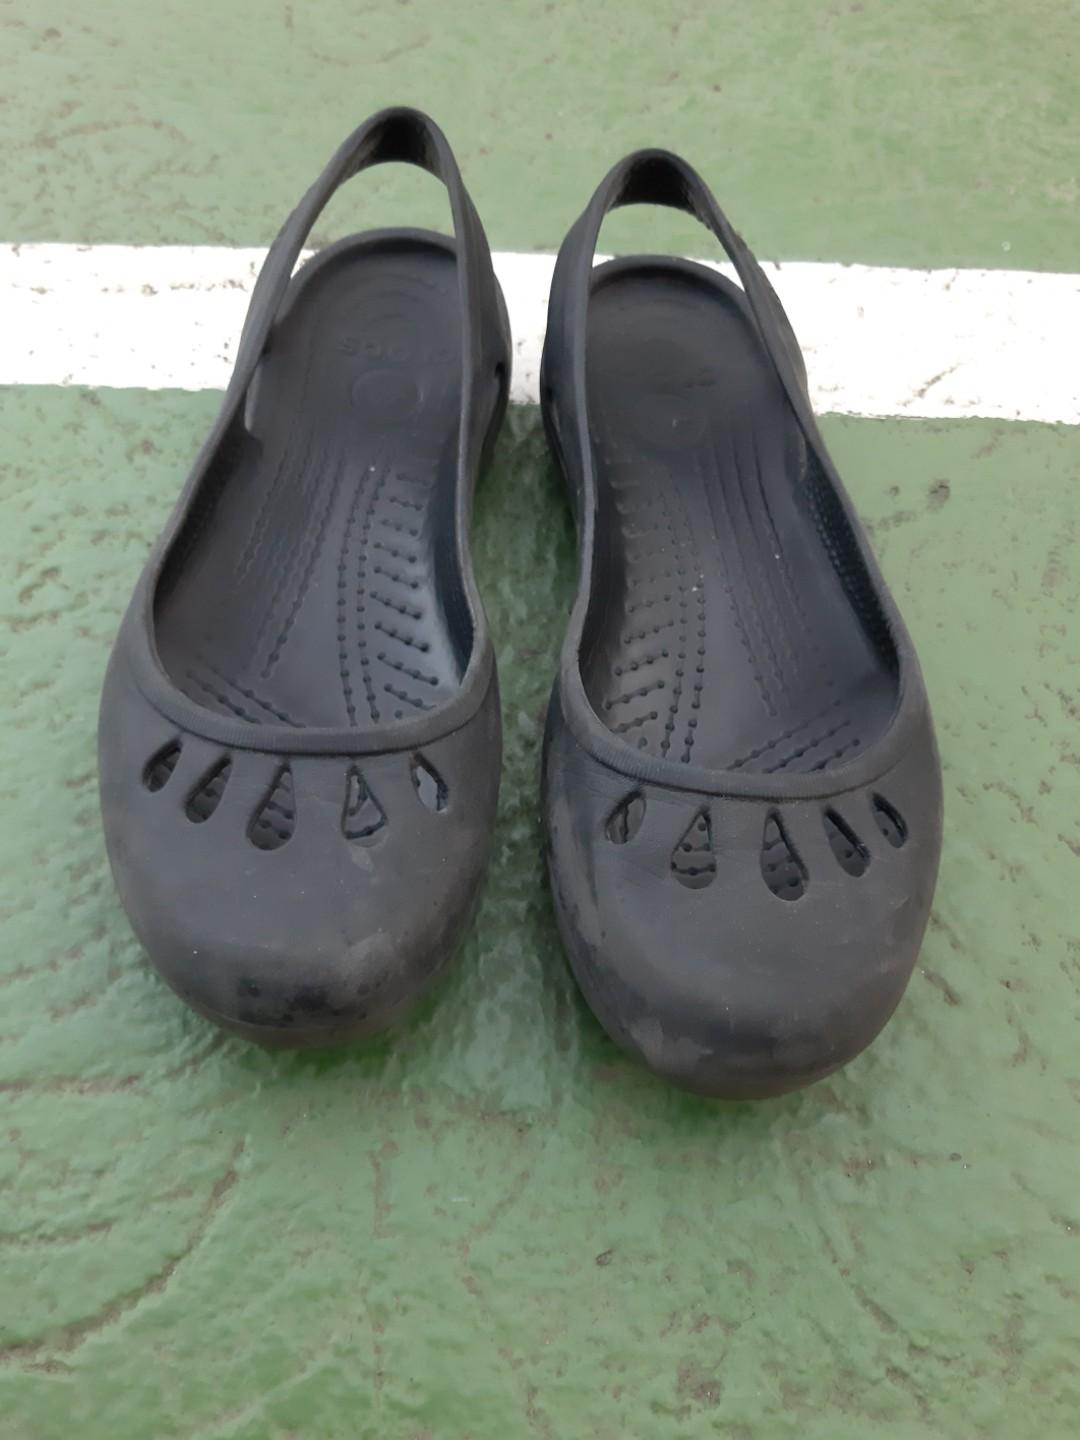 black crocs women's size 8